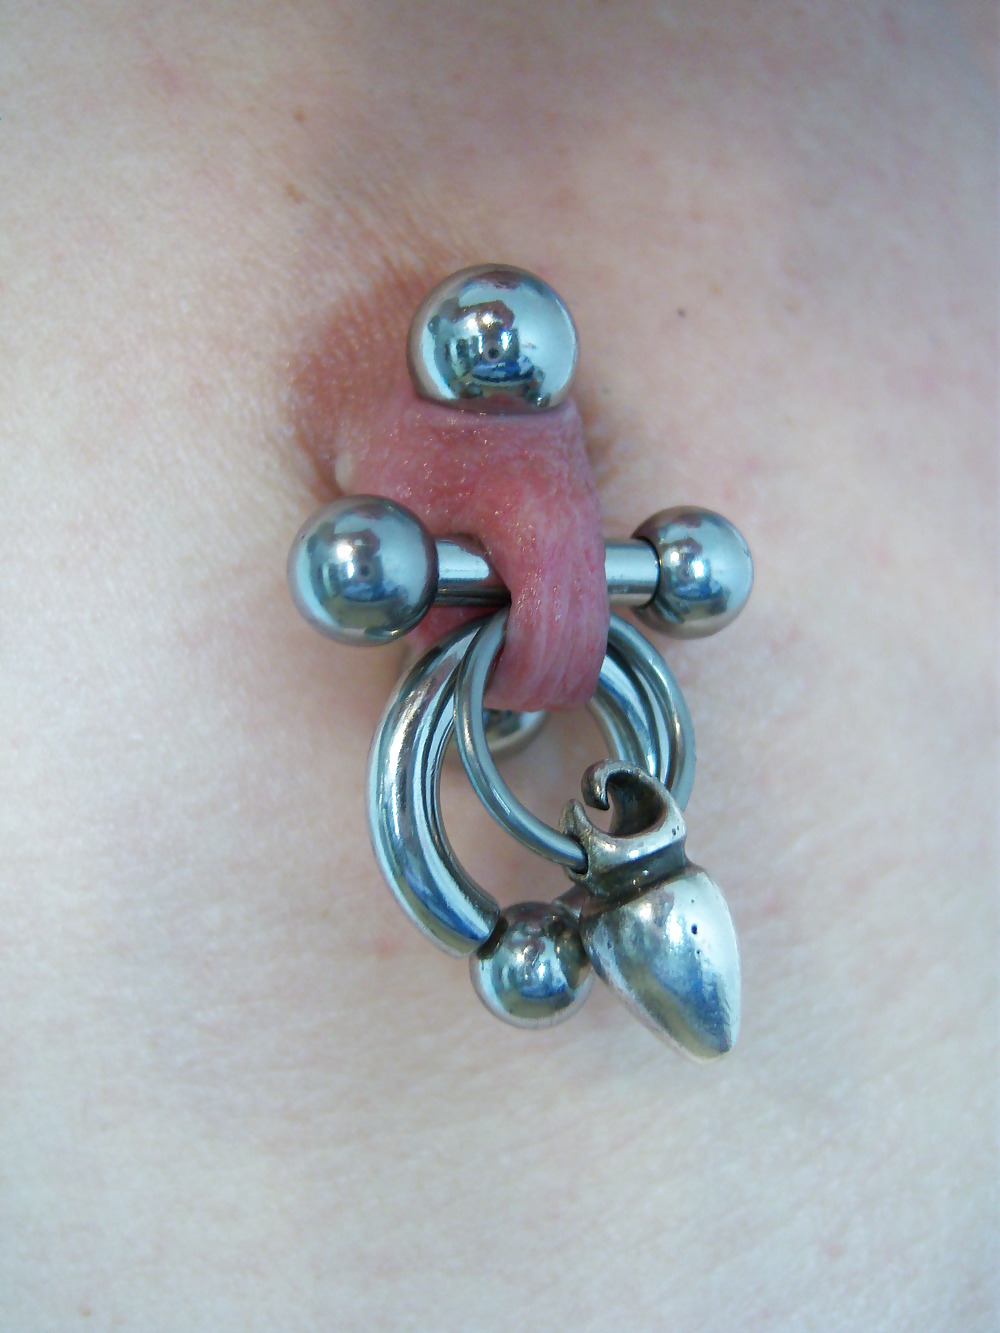 My pierced genitals and nipples. #664176